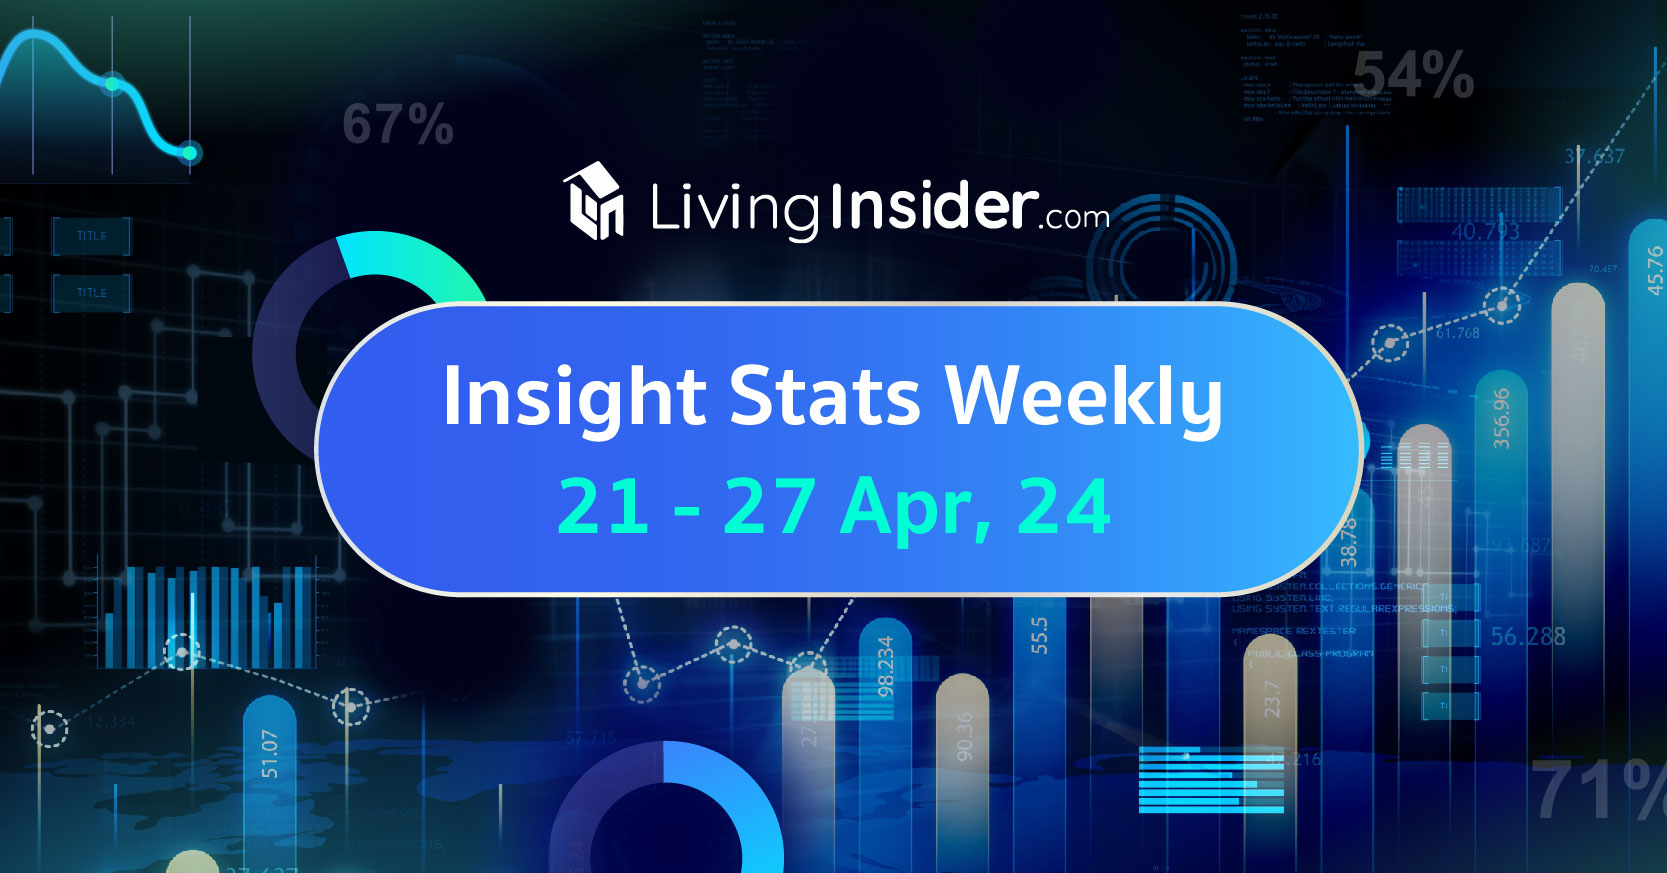 Livinginsider - Weekly Insight Report [21-27 Jan 2024]